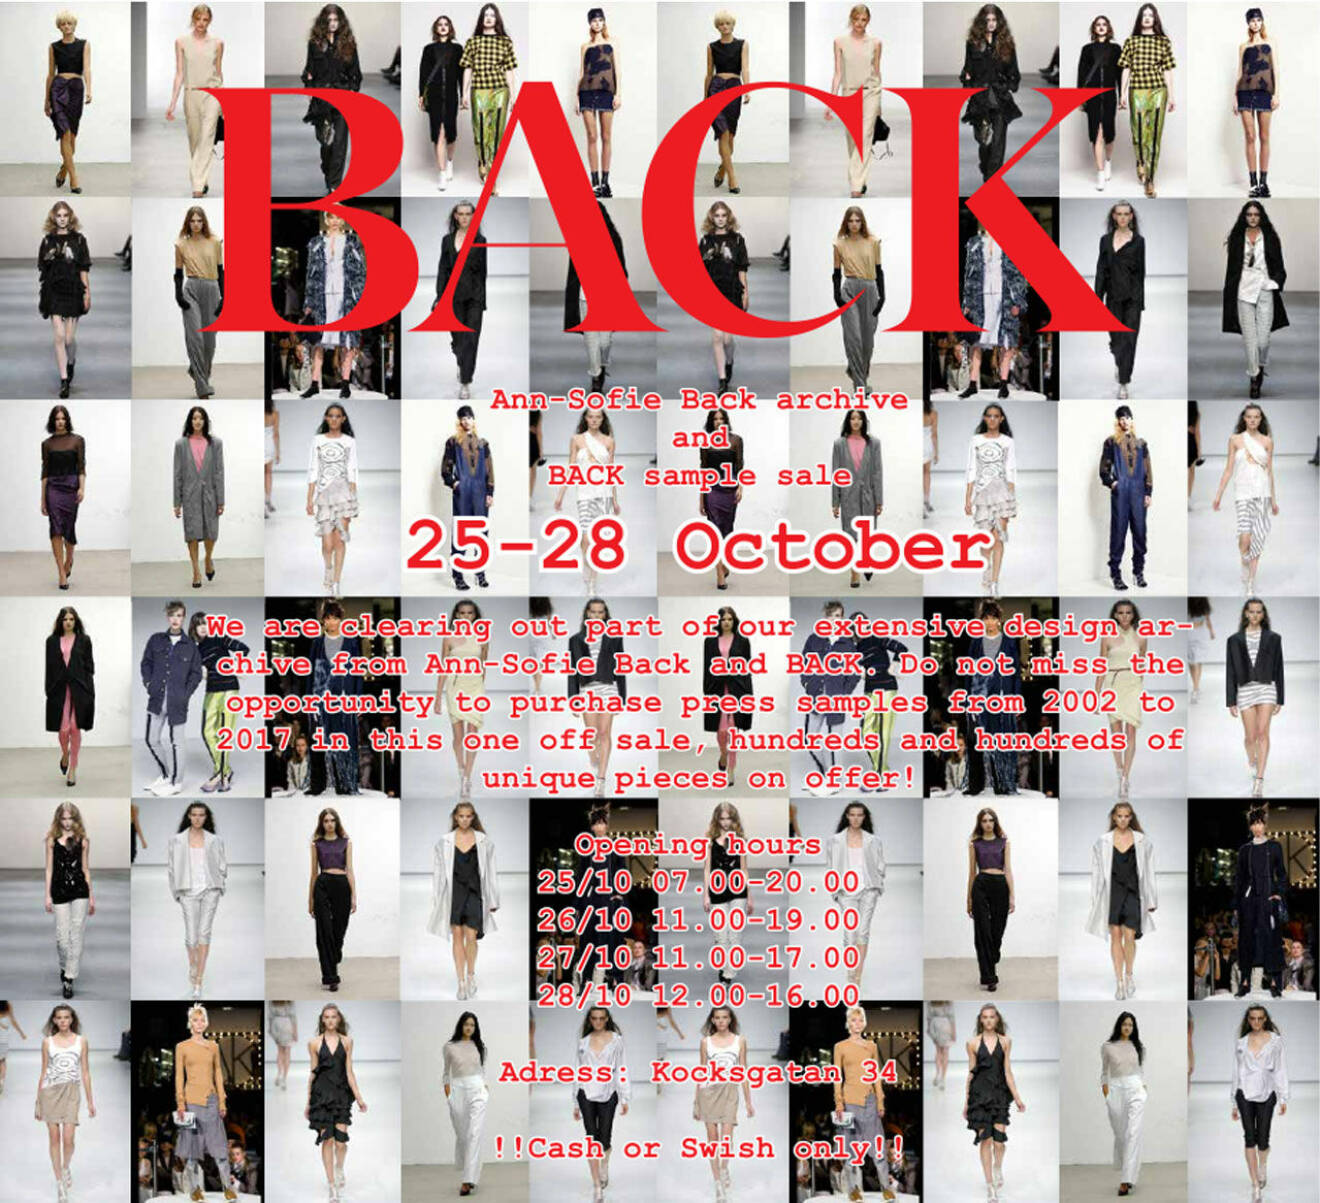 Den 25 till 28 oktober har Ann-Sofie Back Sample Sale i Stockholm.